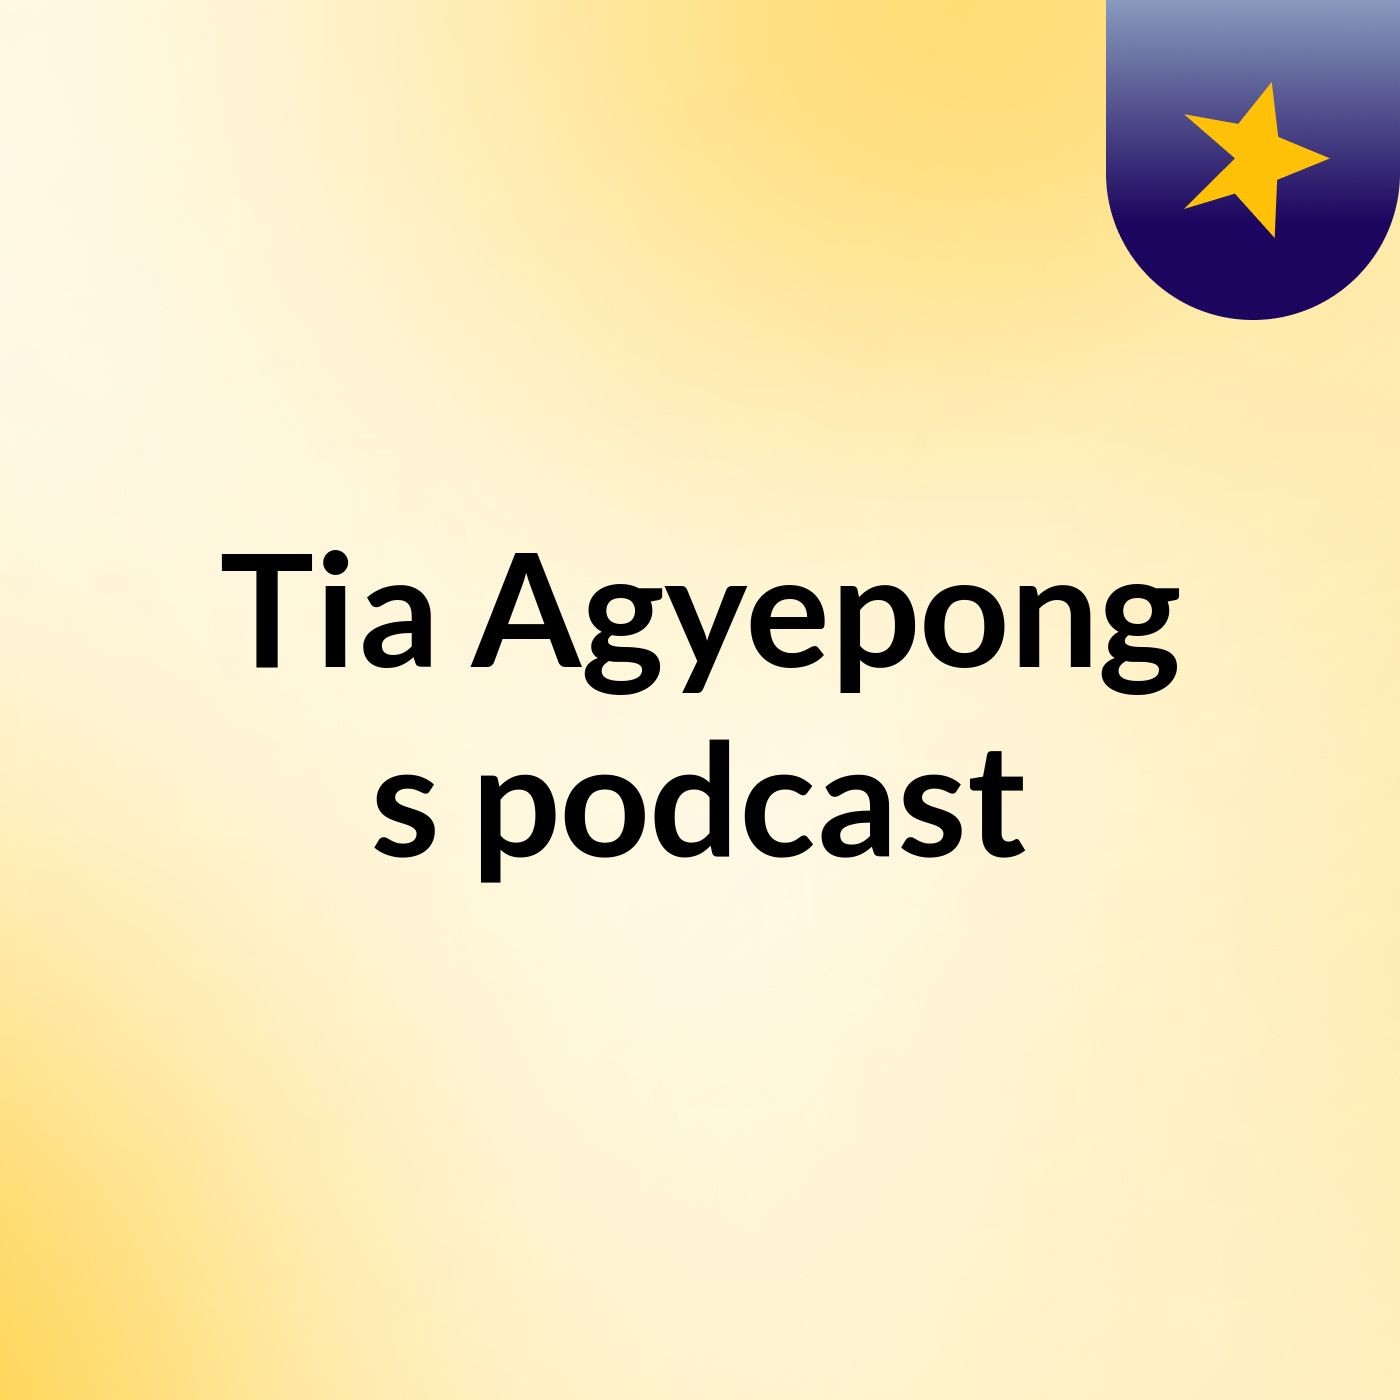 Tia Agyepong's podcast